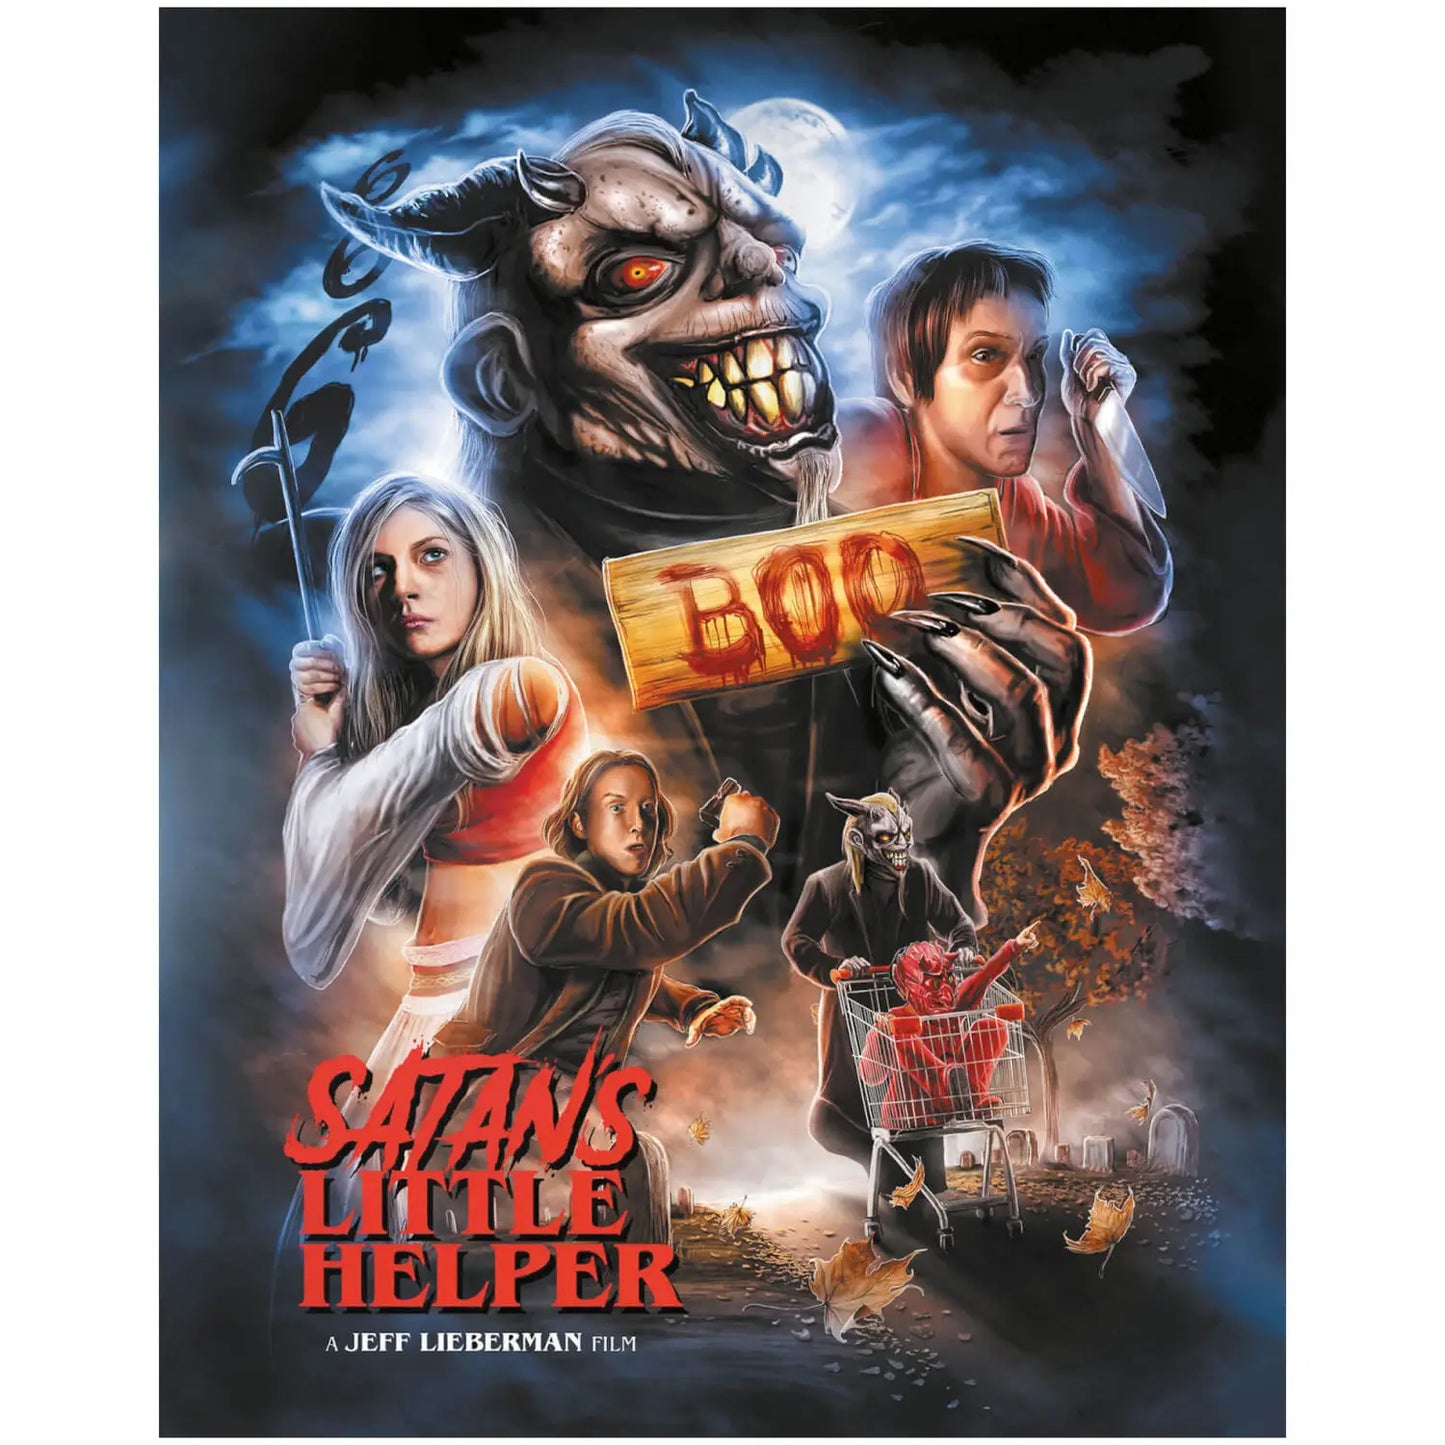 Satan's Little Helper Blu-ray with Slipcase (Treasured Films/Region B)